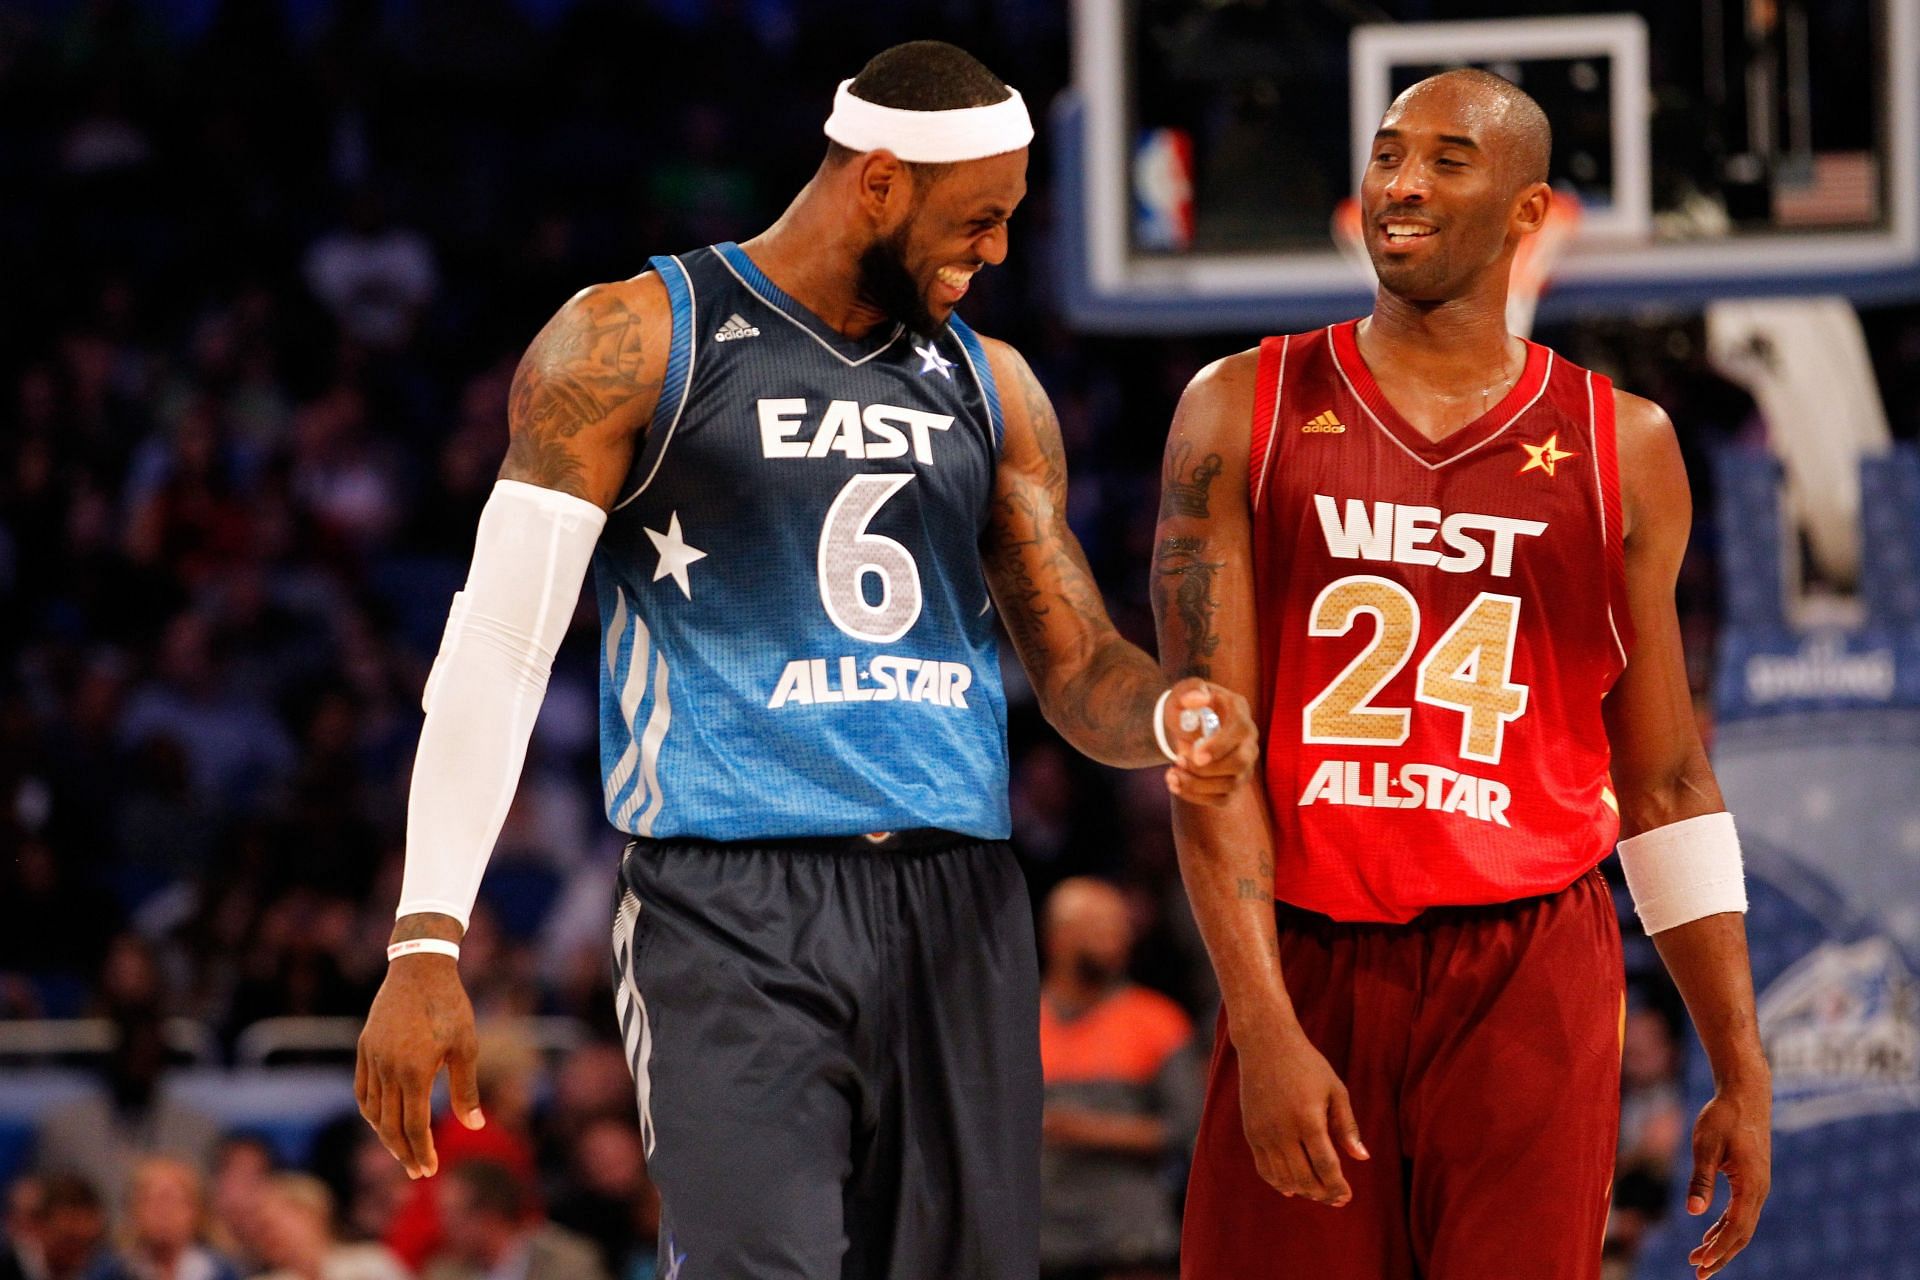 LeBron James and Kobe Bryant at the 2012 NBA All-Star game